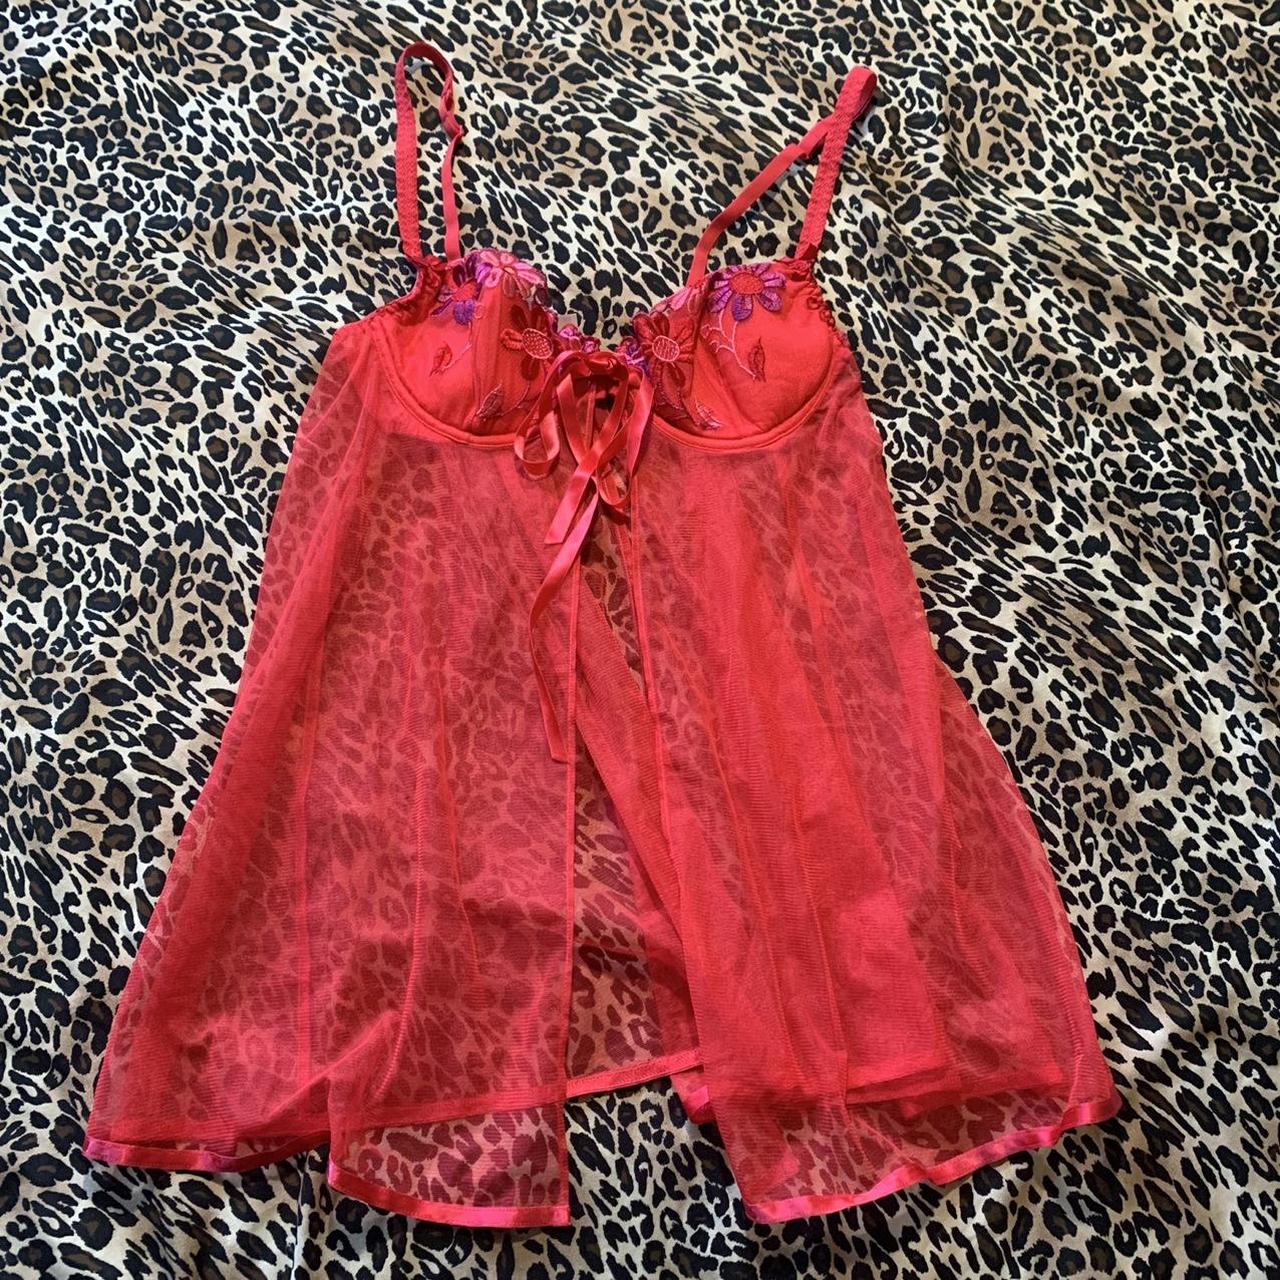 Victoria's Secret Women's Red and Pink Nightwear | Depop